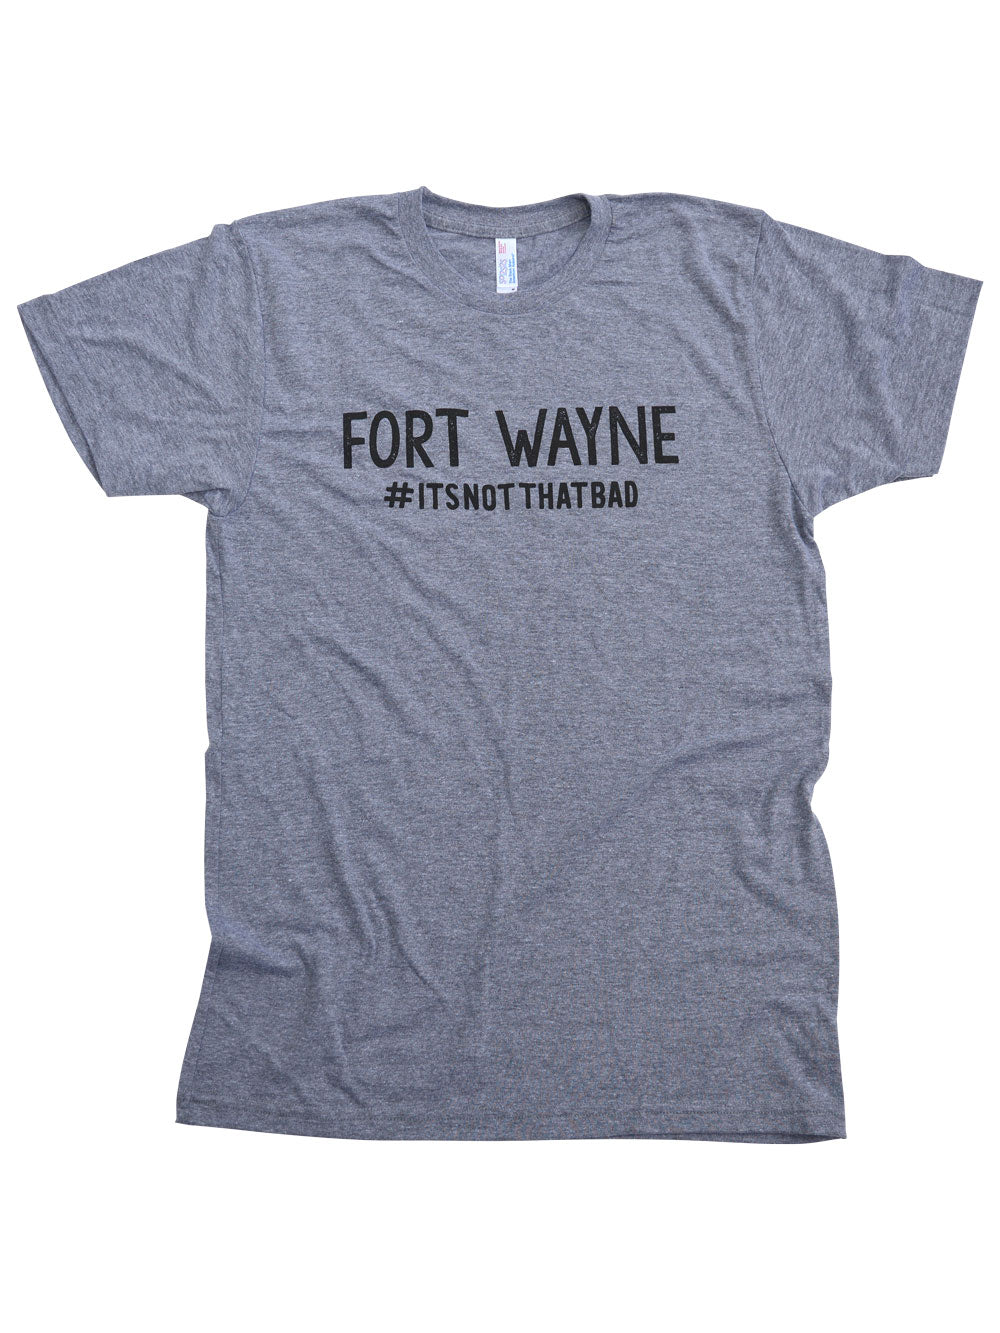 Fort Wayne #ItsNotThatBad